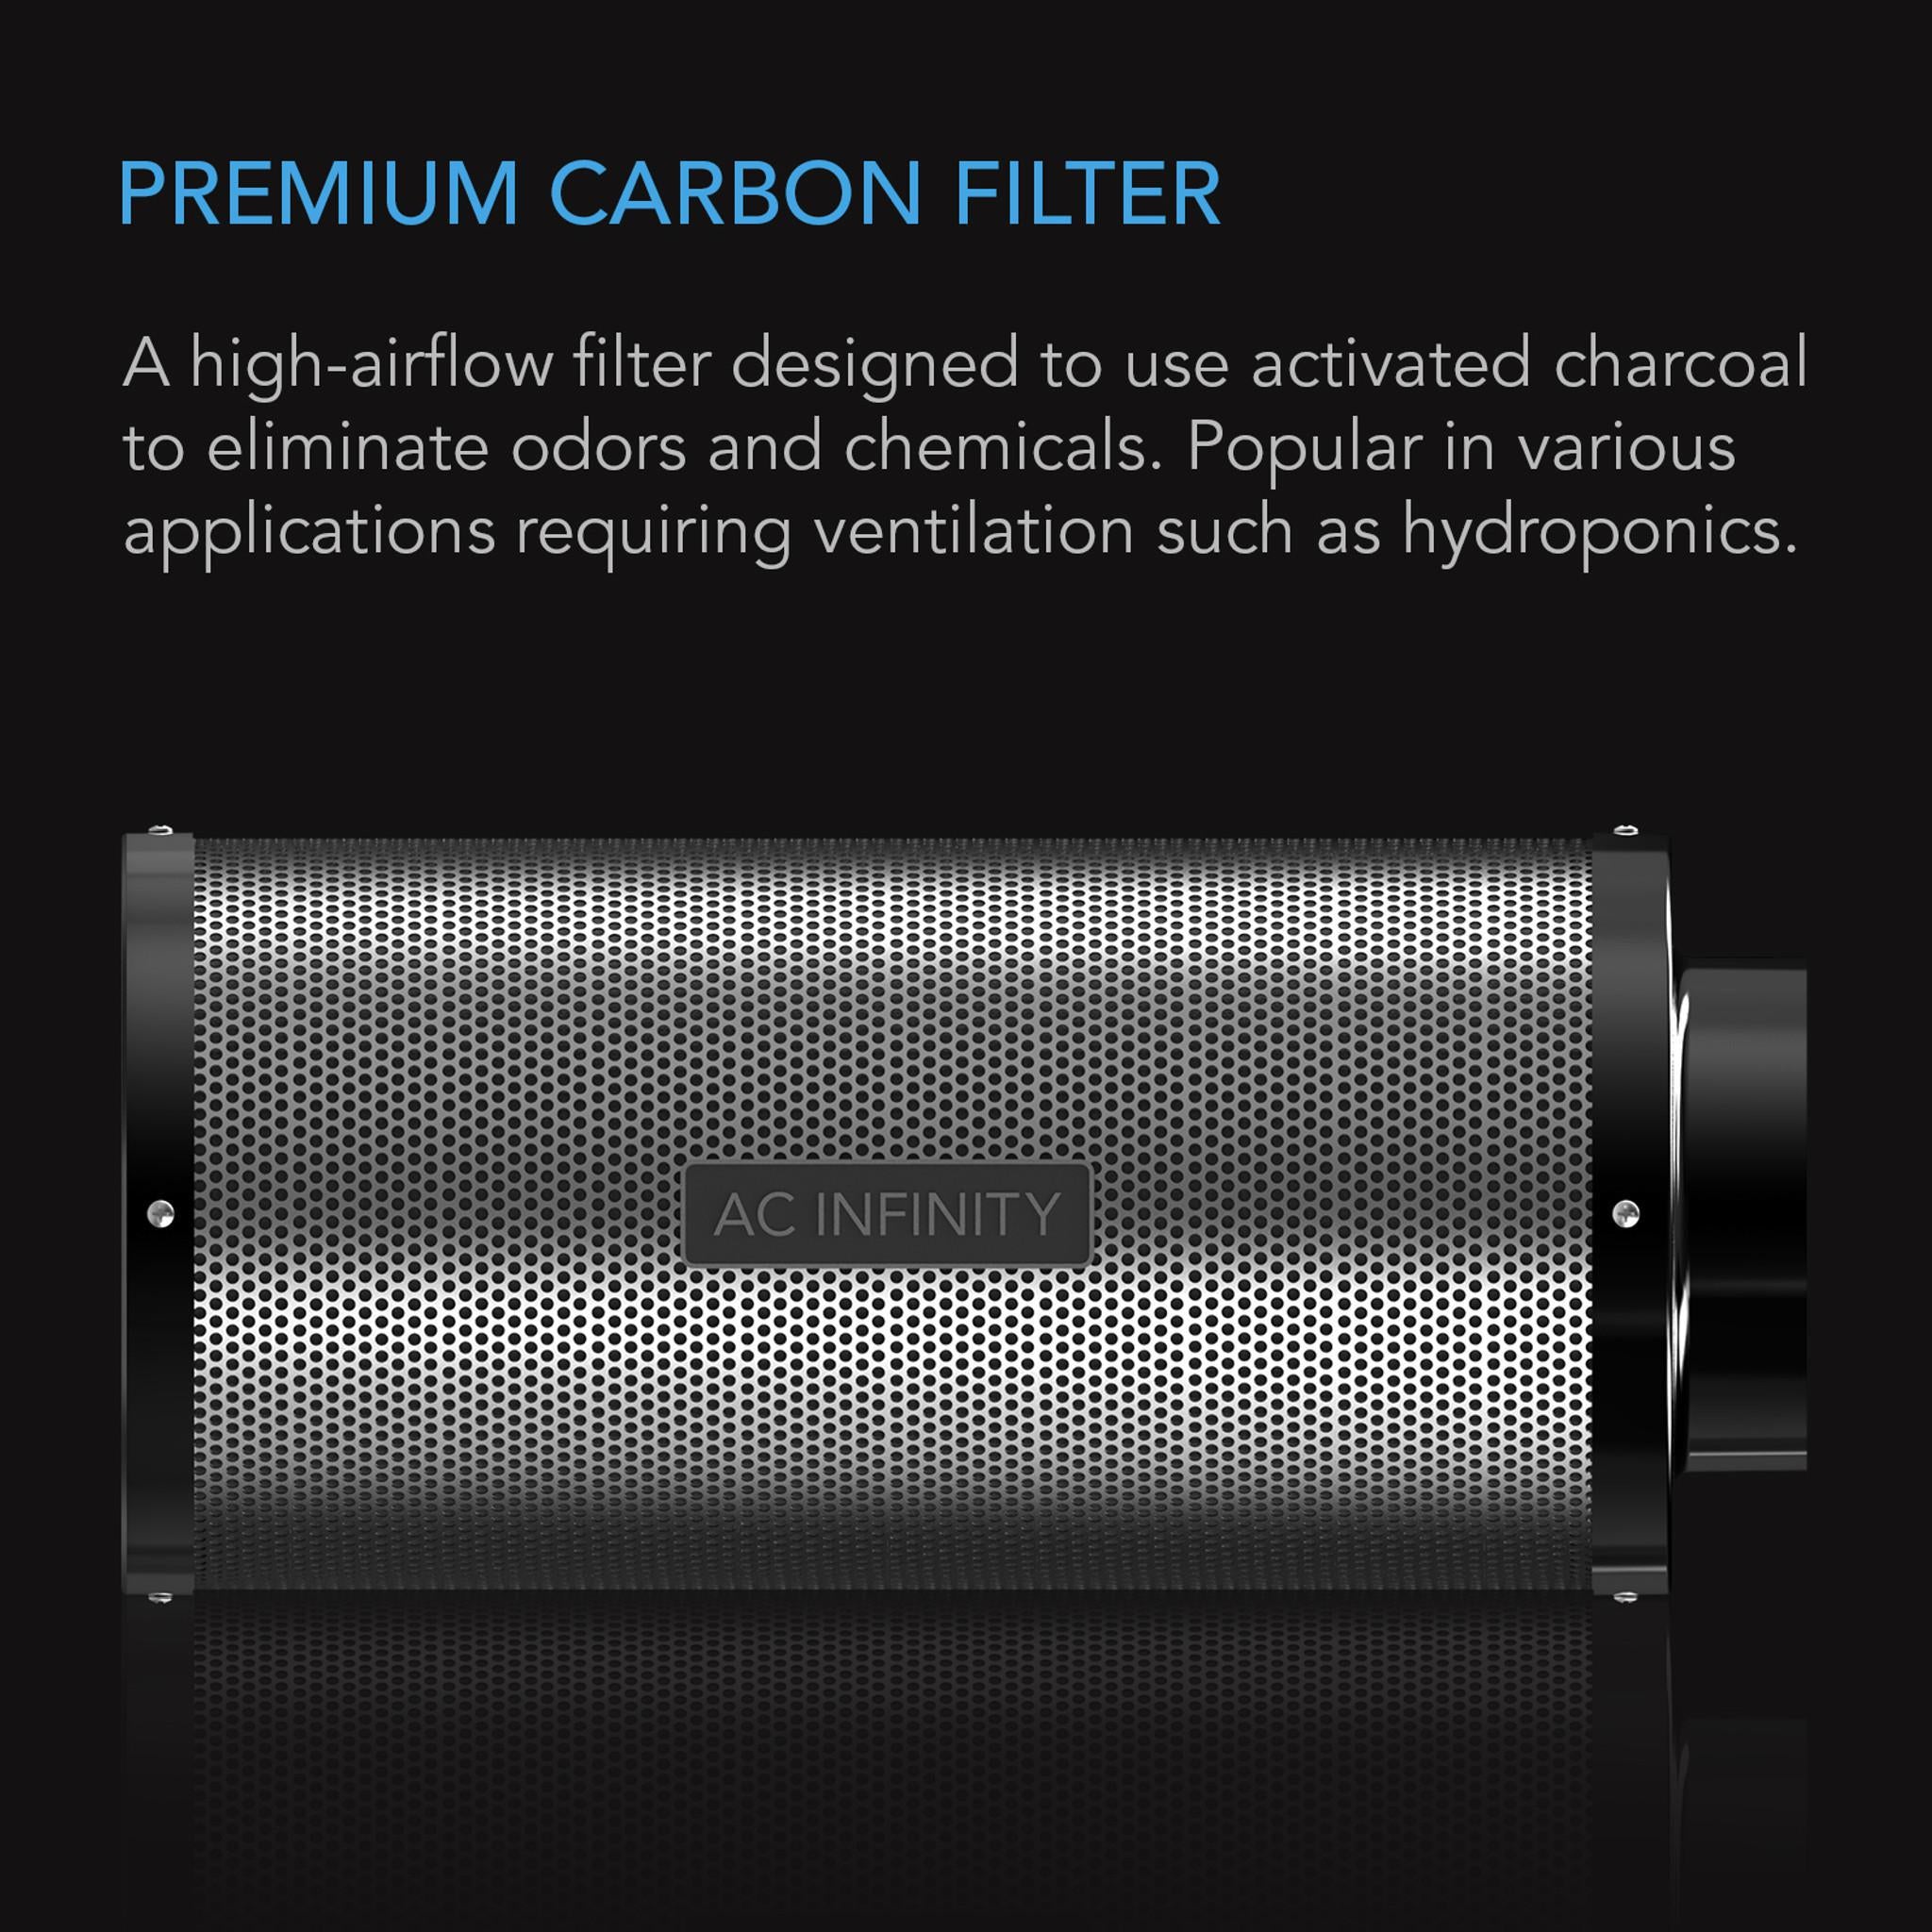 250mm AC Infinity Carbon Filter premium